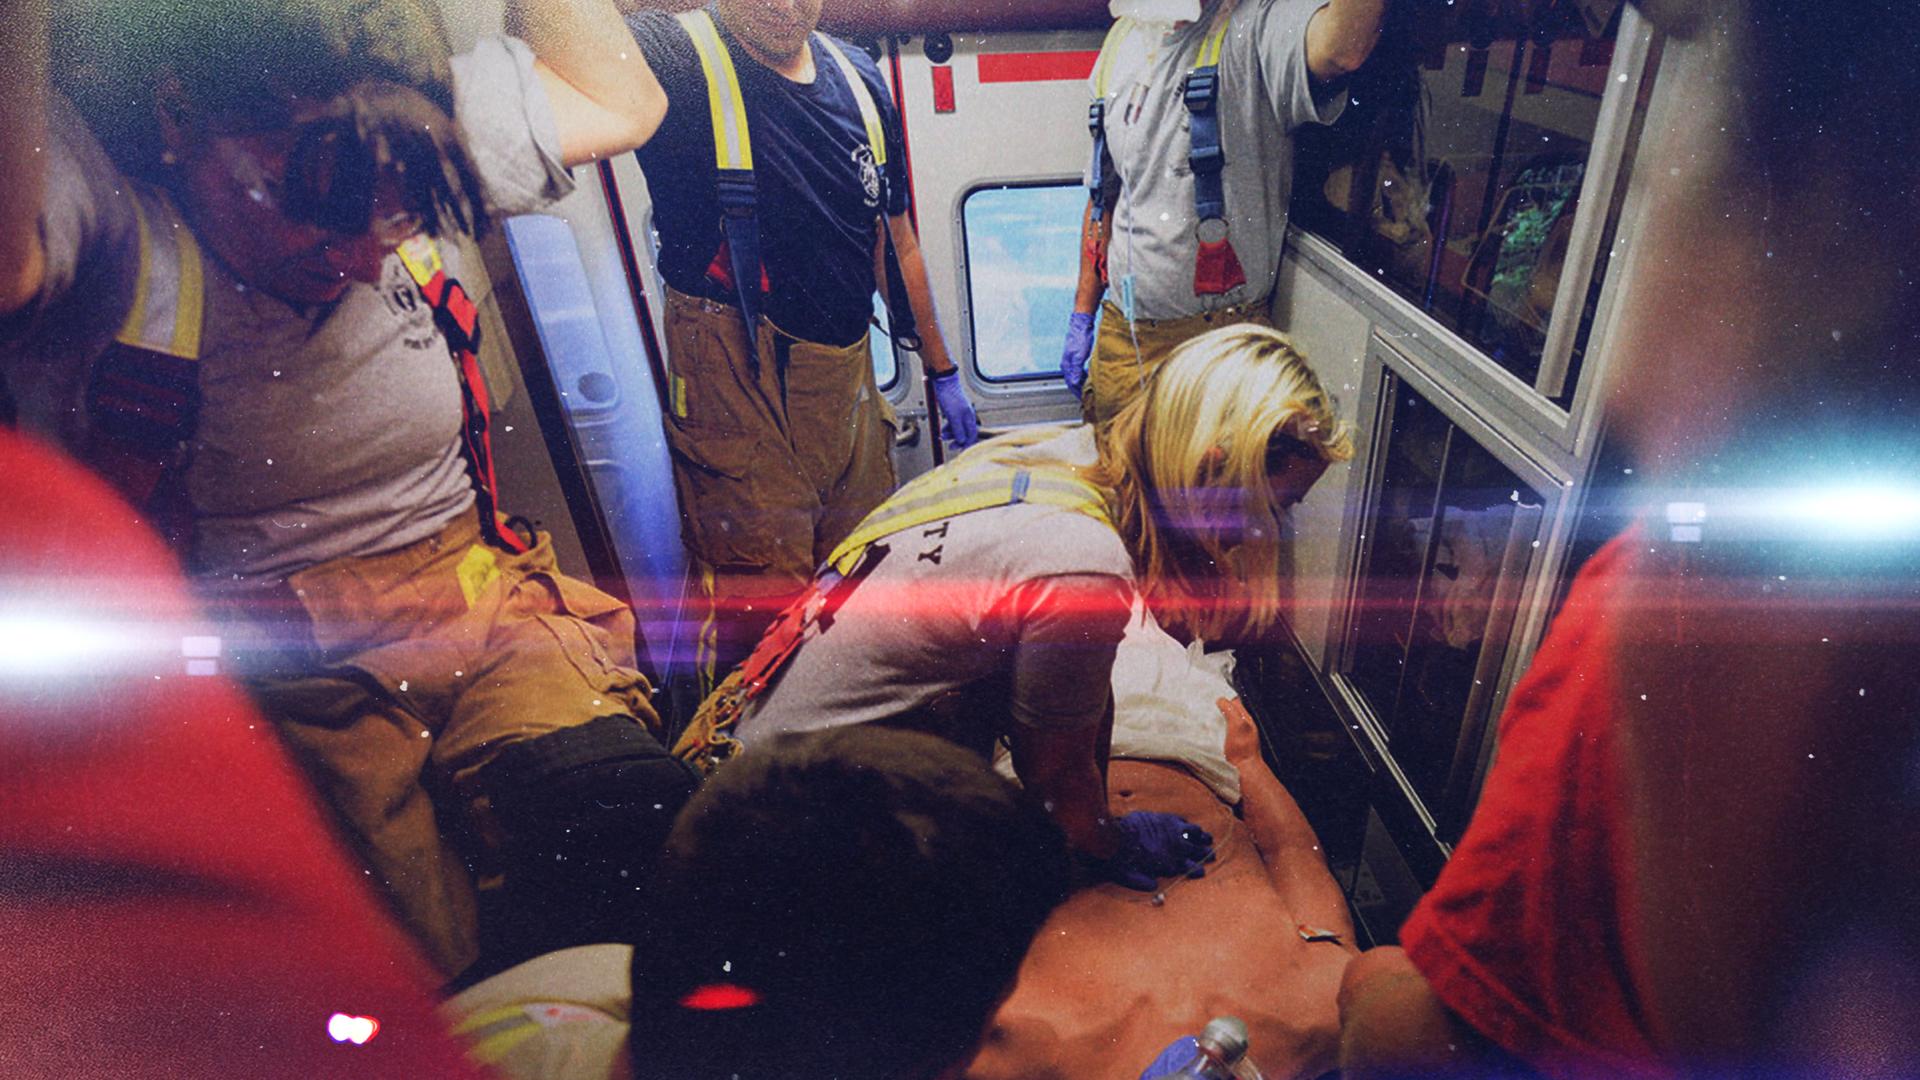 Inside The Ambulance - Trailer